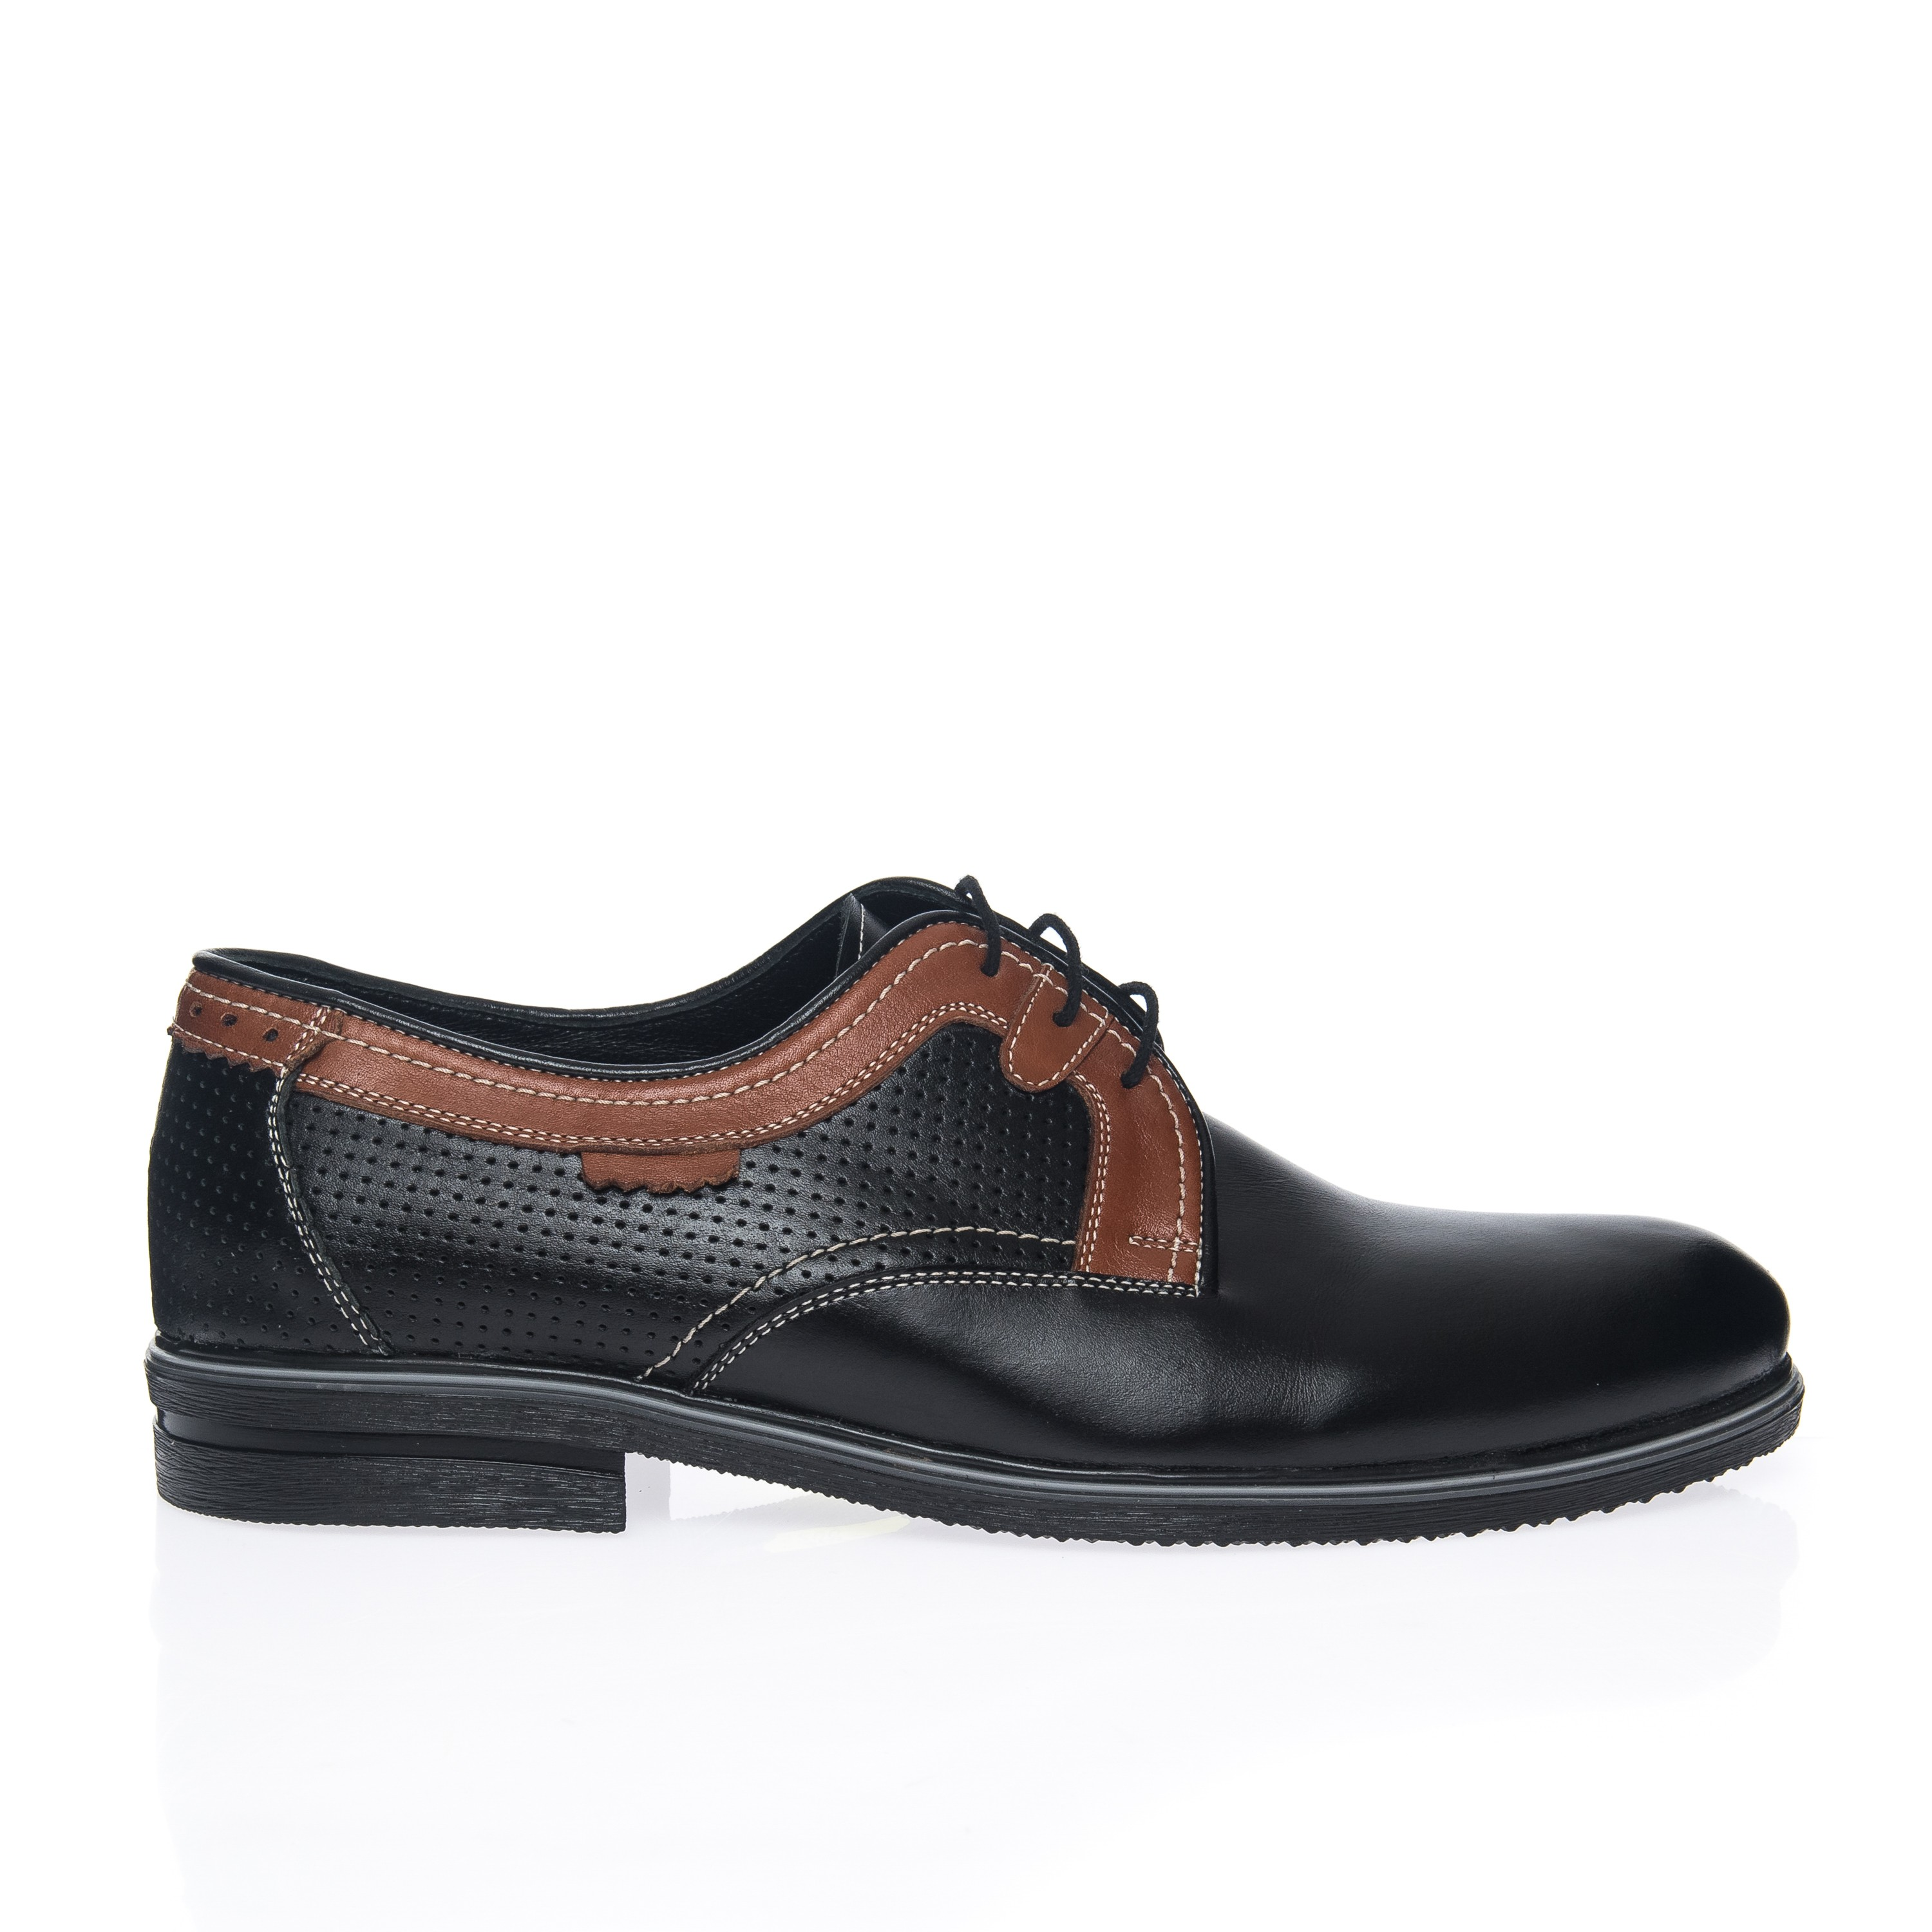 Pantofi barbati din piele naturala - Negru Box+Maro - 408 NB+M